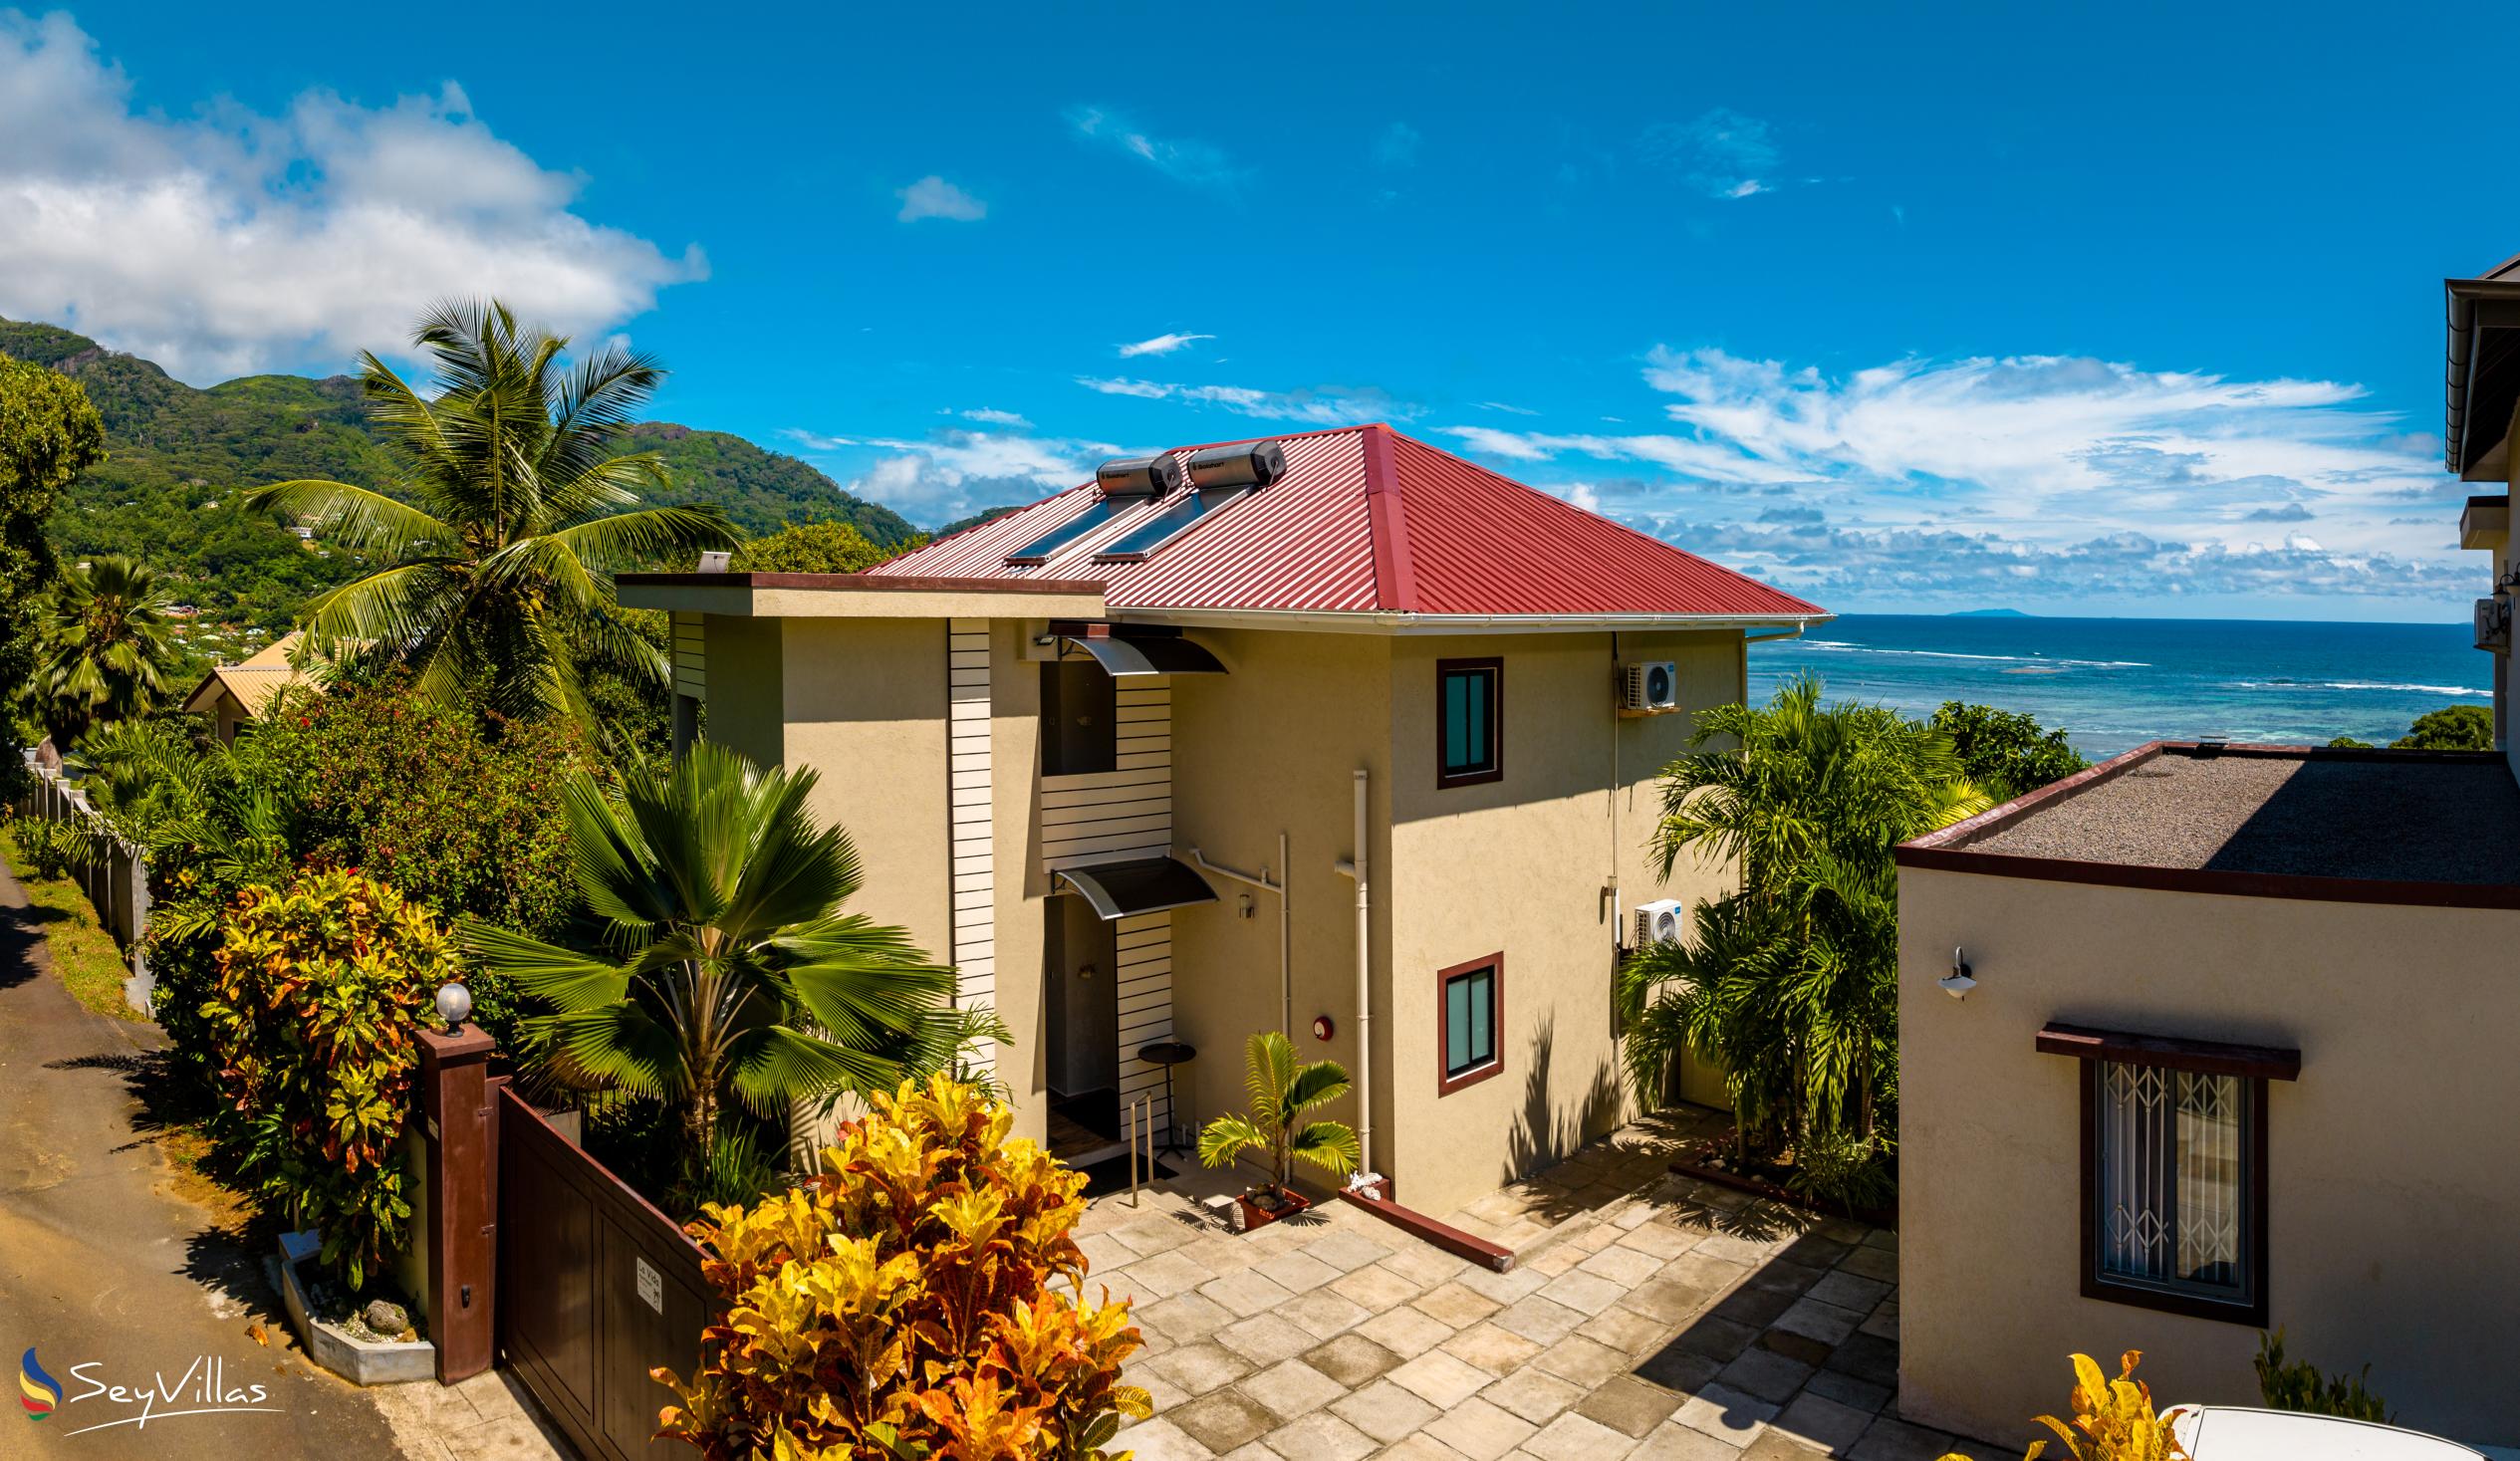 Photo 3: La Vida Selfcatering Apartments - Outdoor area - Mahé (Seychelles)